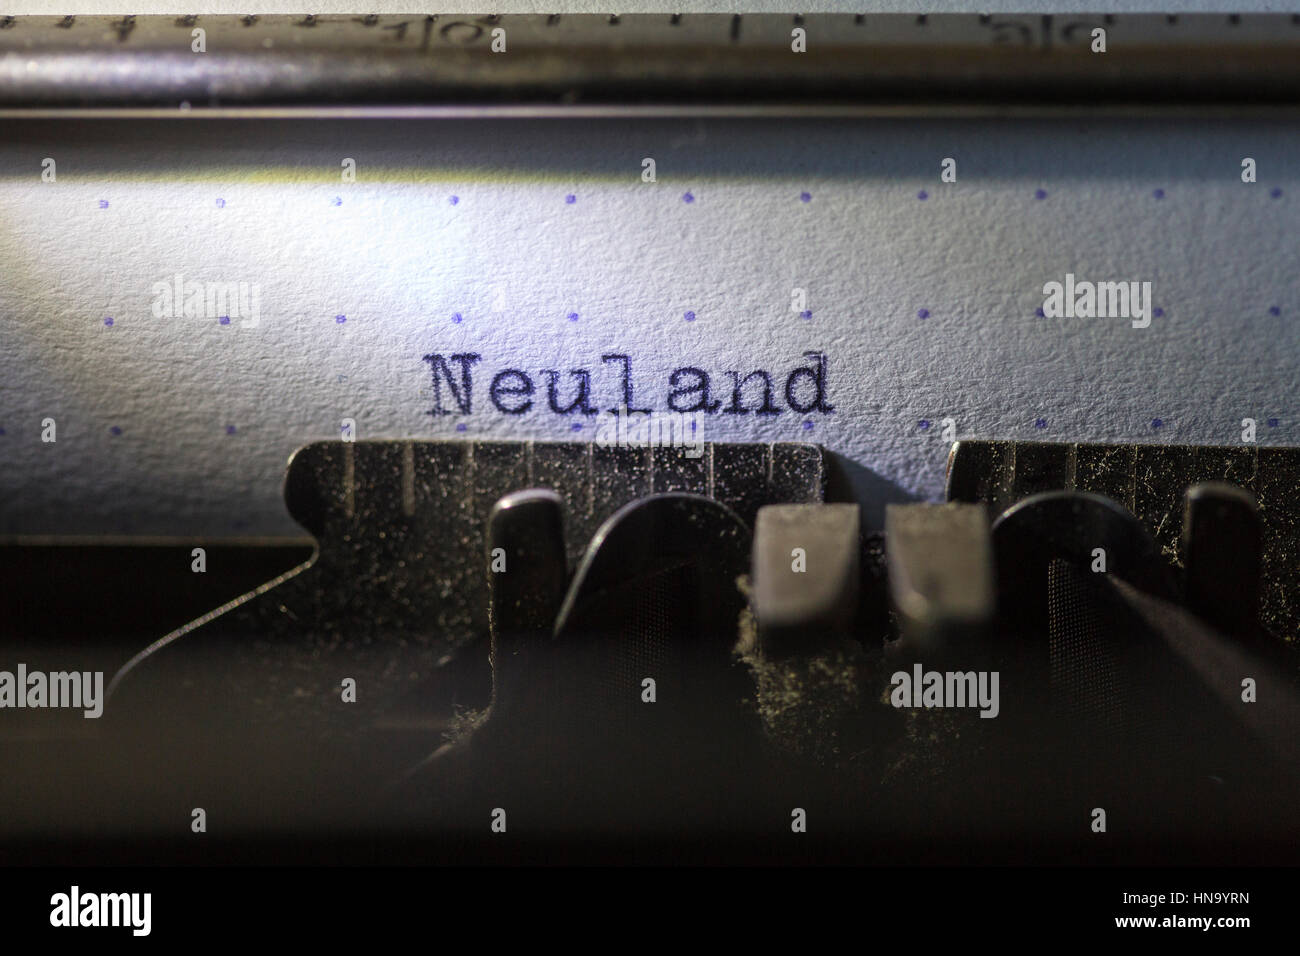 Word Neuland typed on old typewriter, Germany Stock Photo